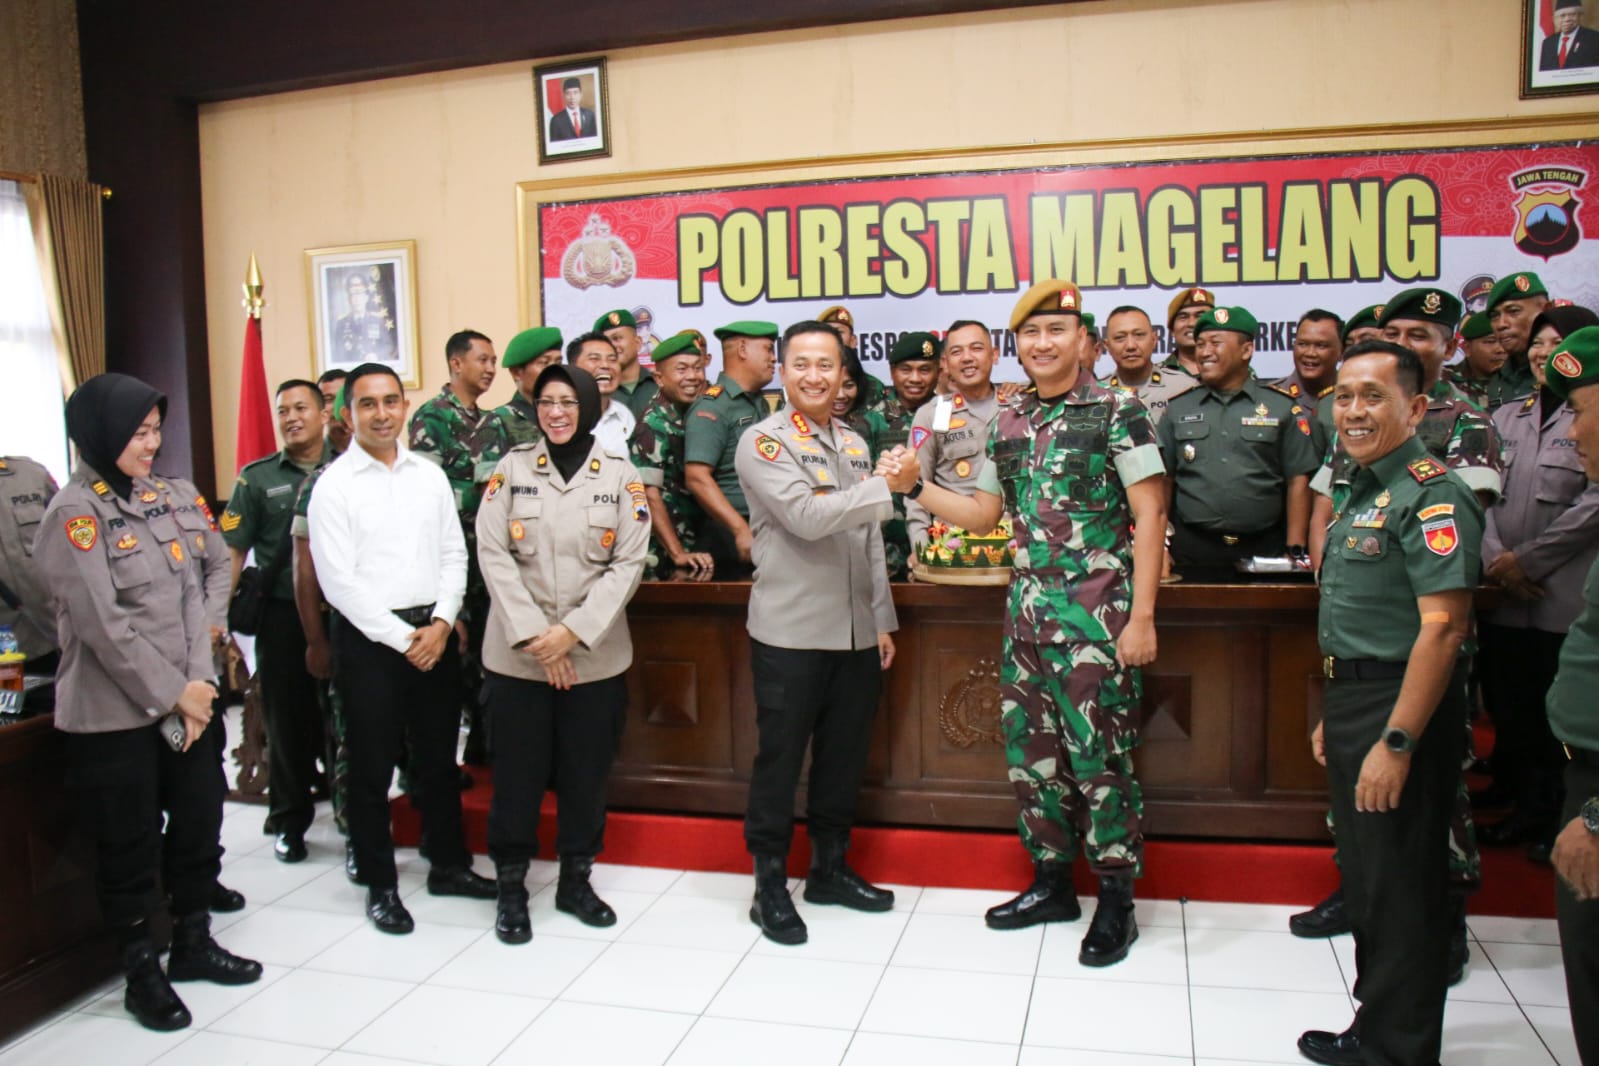 Momentum Bahagia: Hari Bhayangkara ke-77 Dirayakan dengan Kehadiran Puluhan Personel TNI, Kejaksaan, dan Pemda Menghantarkan Tumpeng Istimewa ke Polresta Magelang